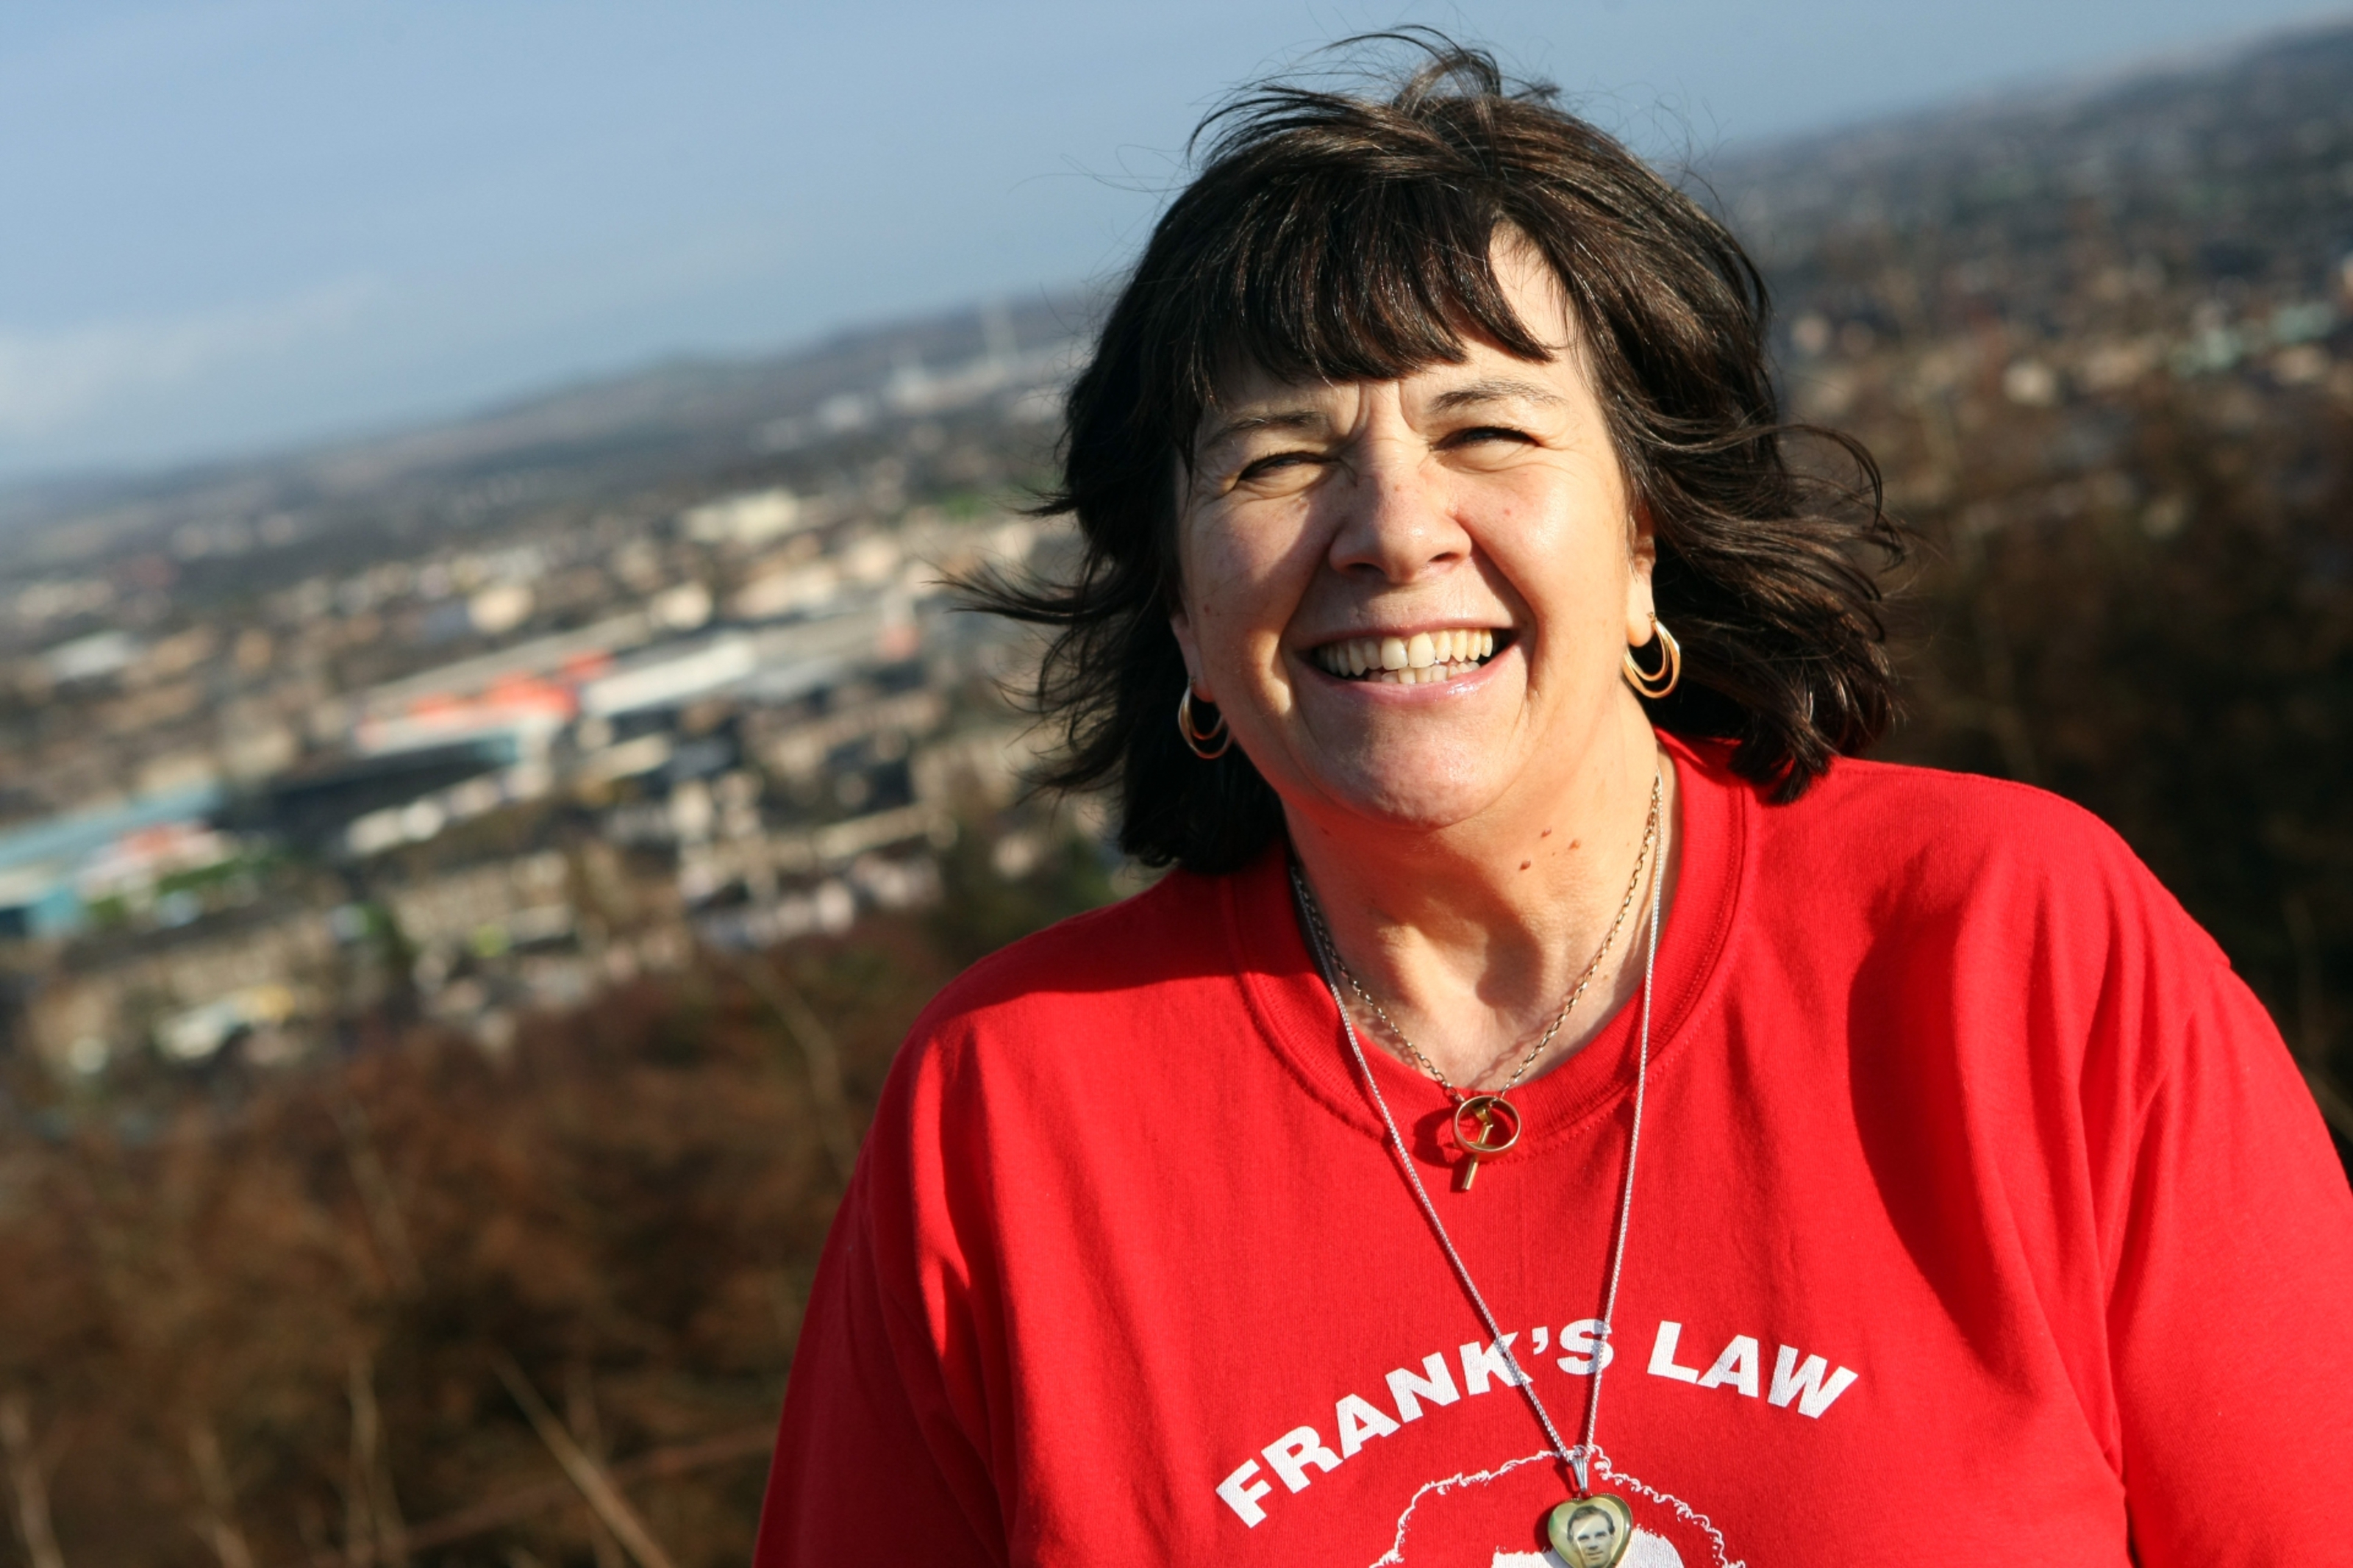 Frank's Law campaigner Amanda Kopel